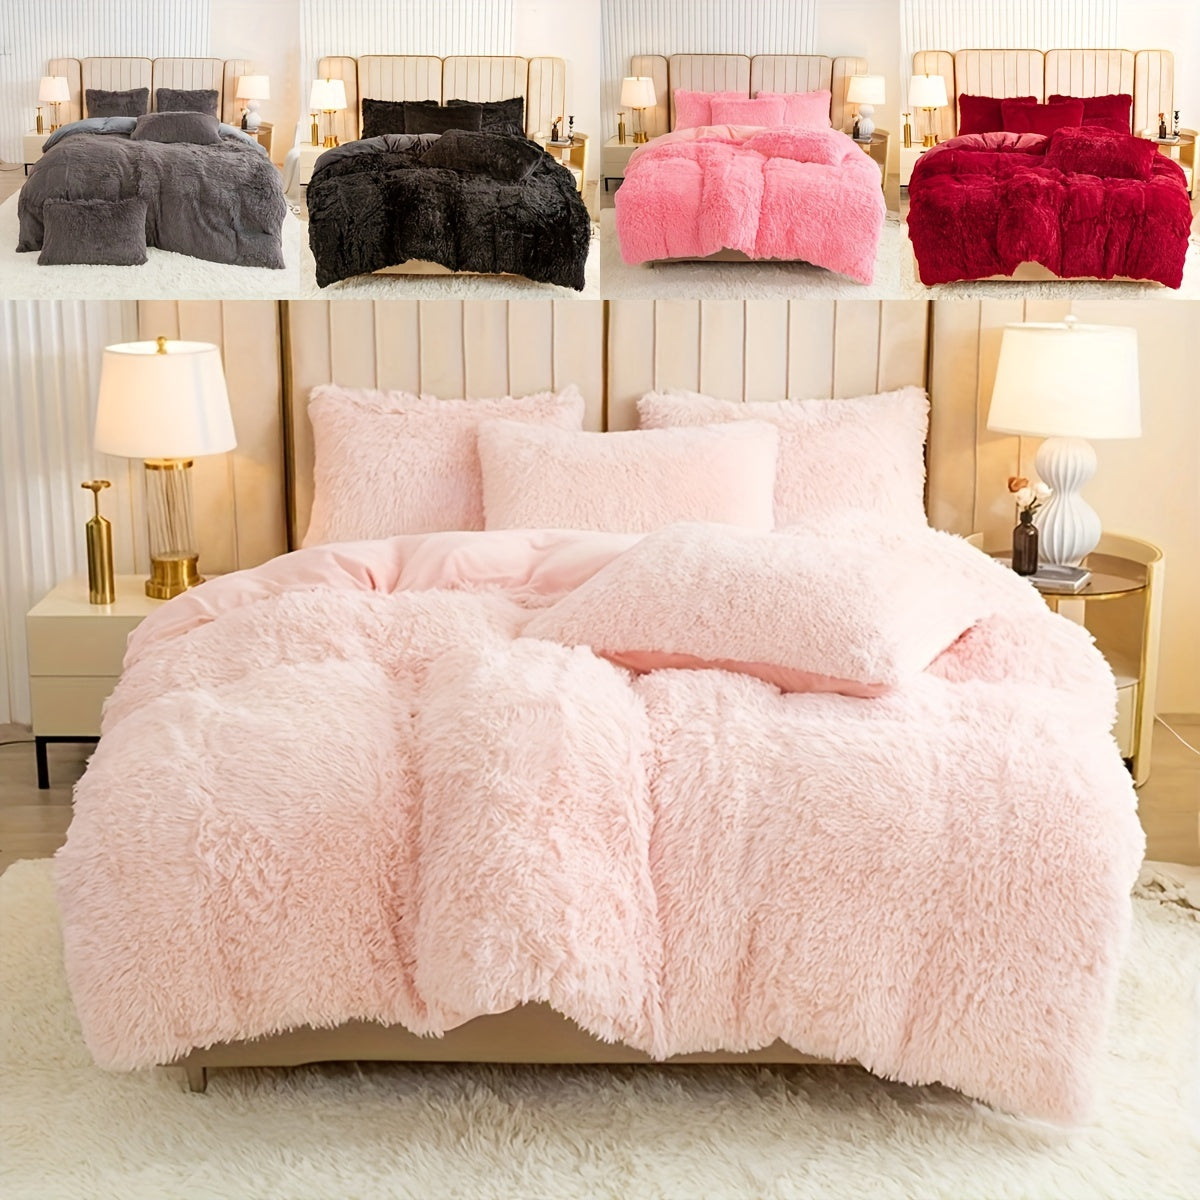 3-Piece Multi-Color Bedding Set - Polyester Duvet Cover & Pillowcases - Machine Washable